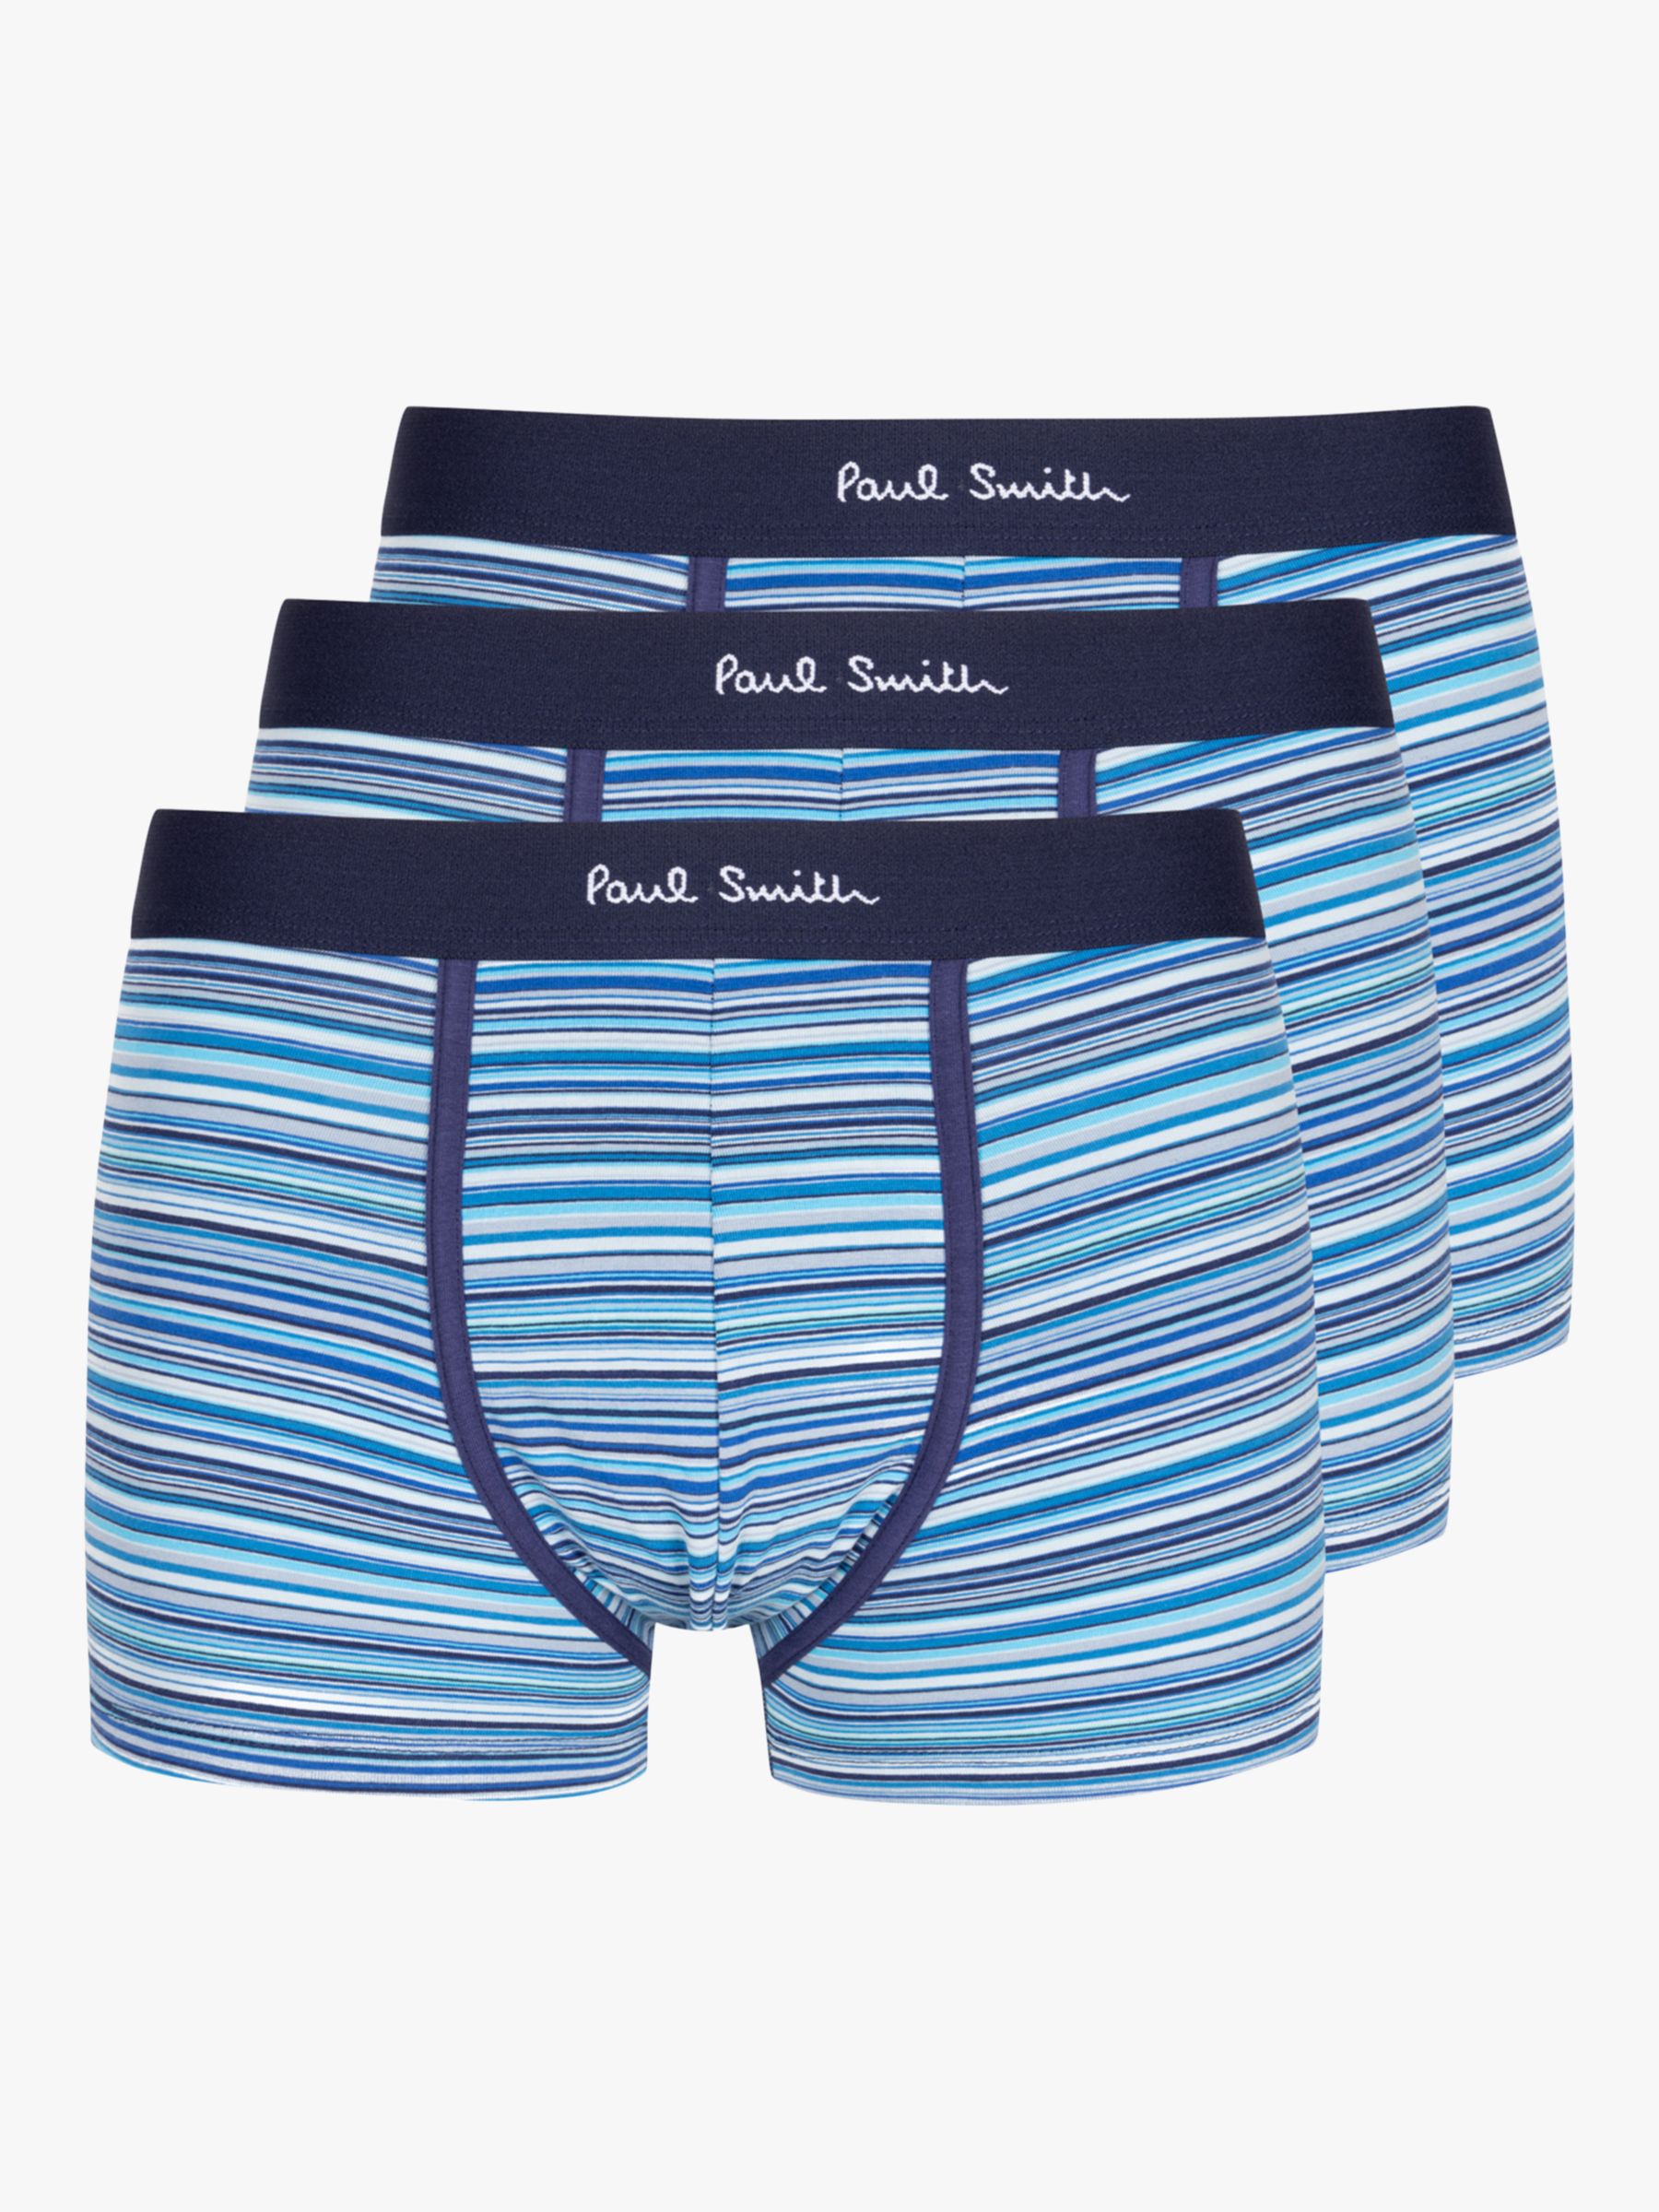 Paul Smith Signature Stripe Organic Cotton Blend Trunks, Pack of 3, Blue/Multi, S